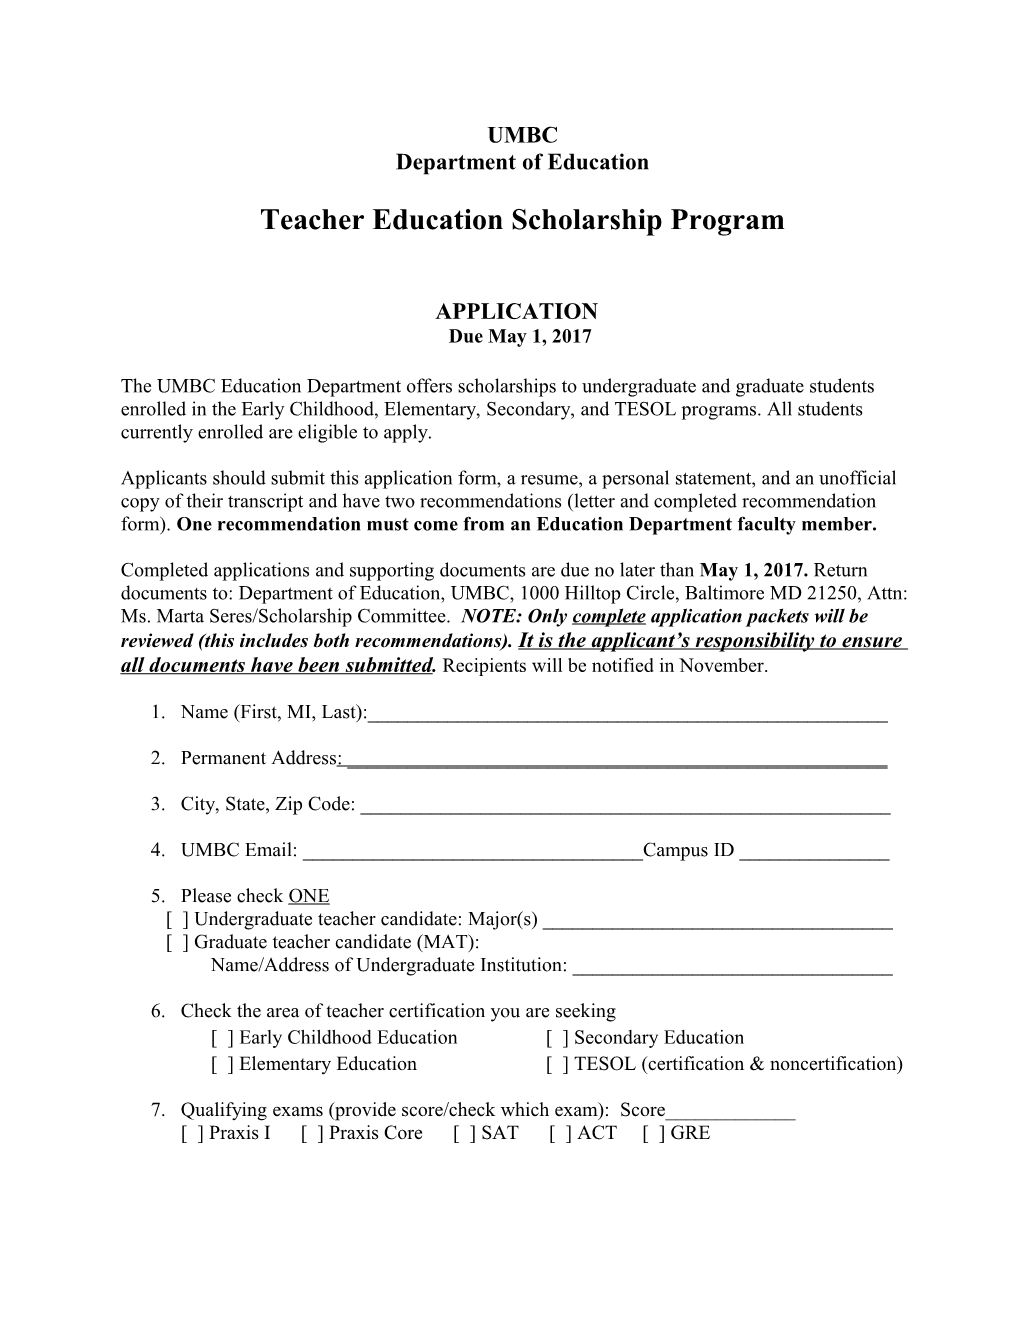 Teacher Education Scholarship Program